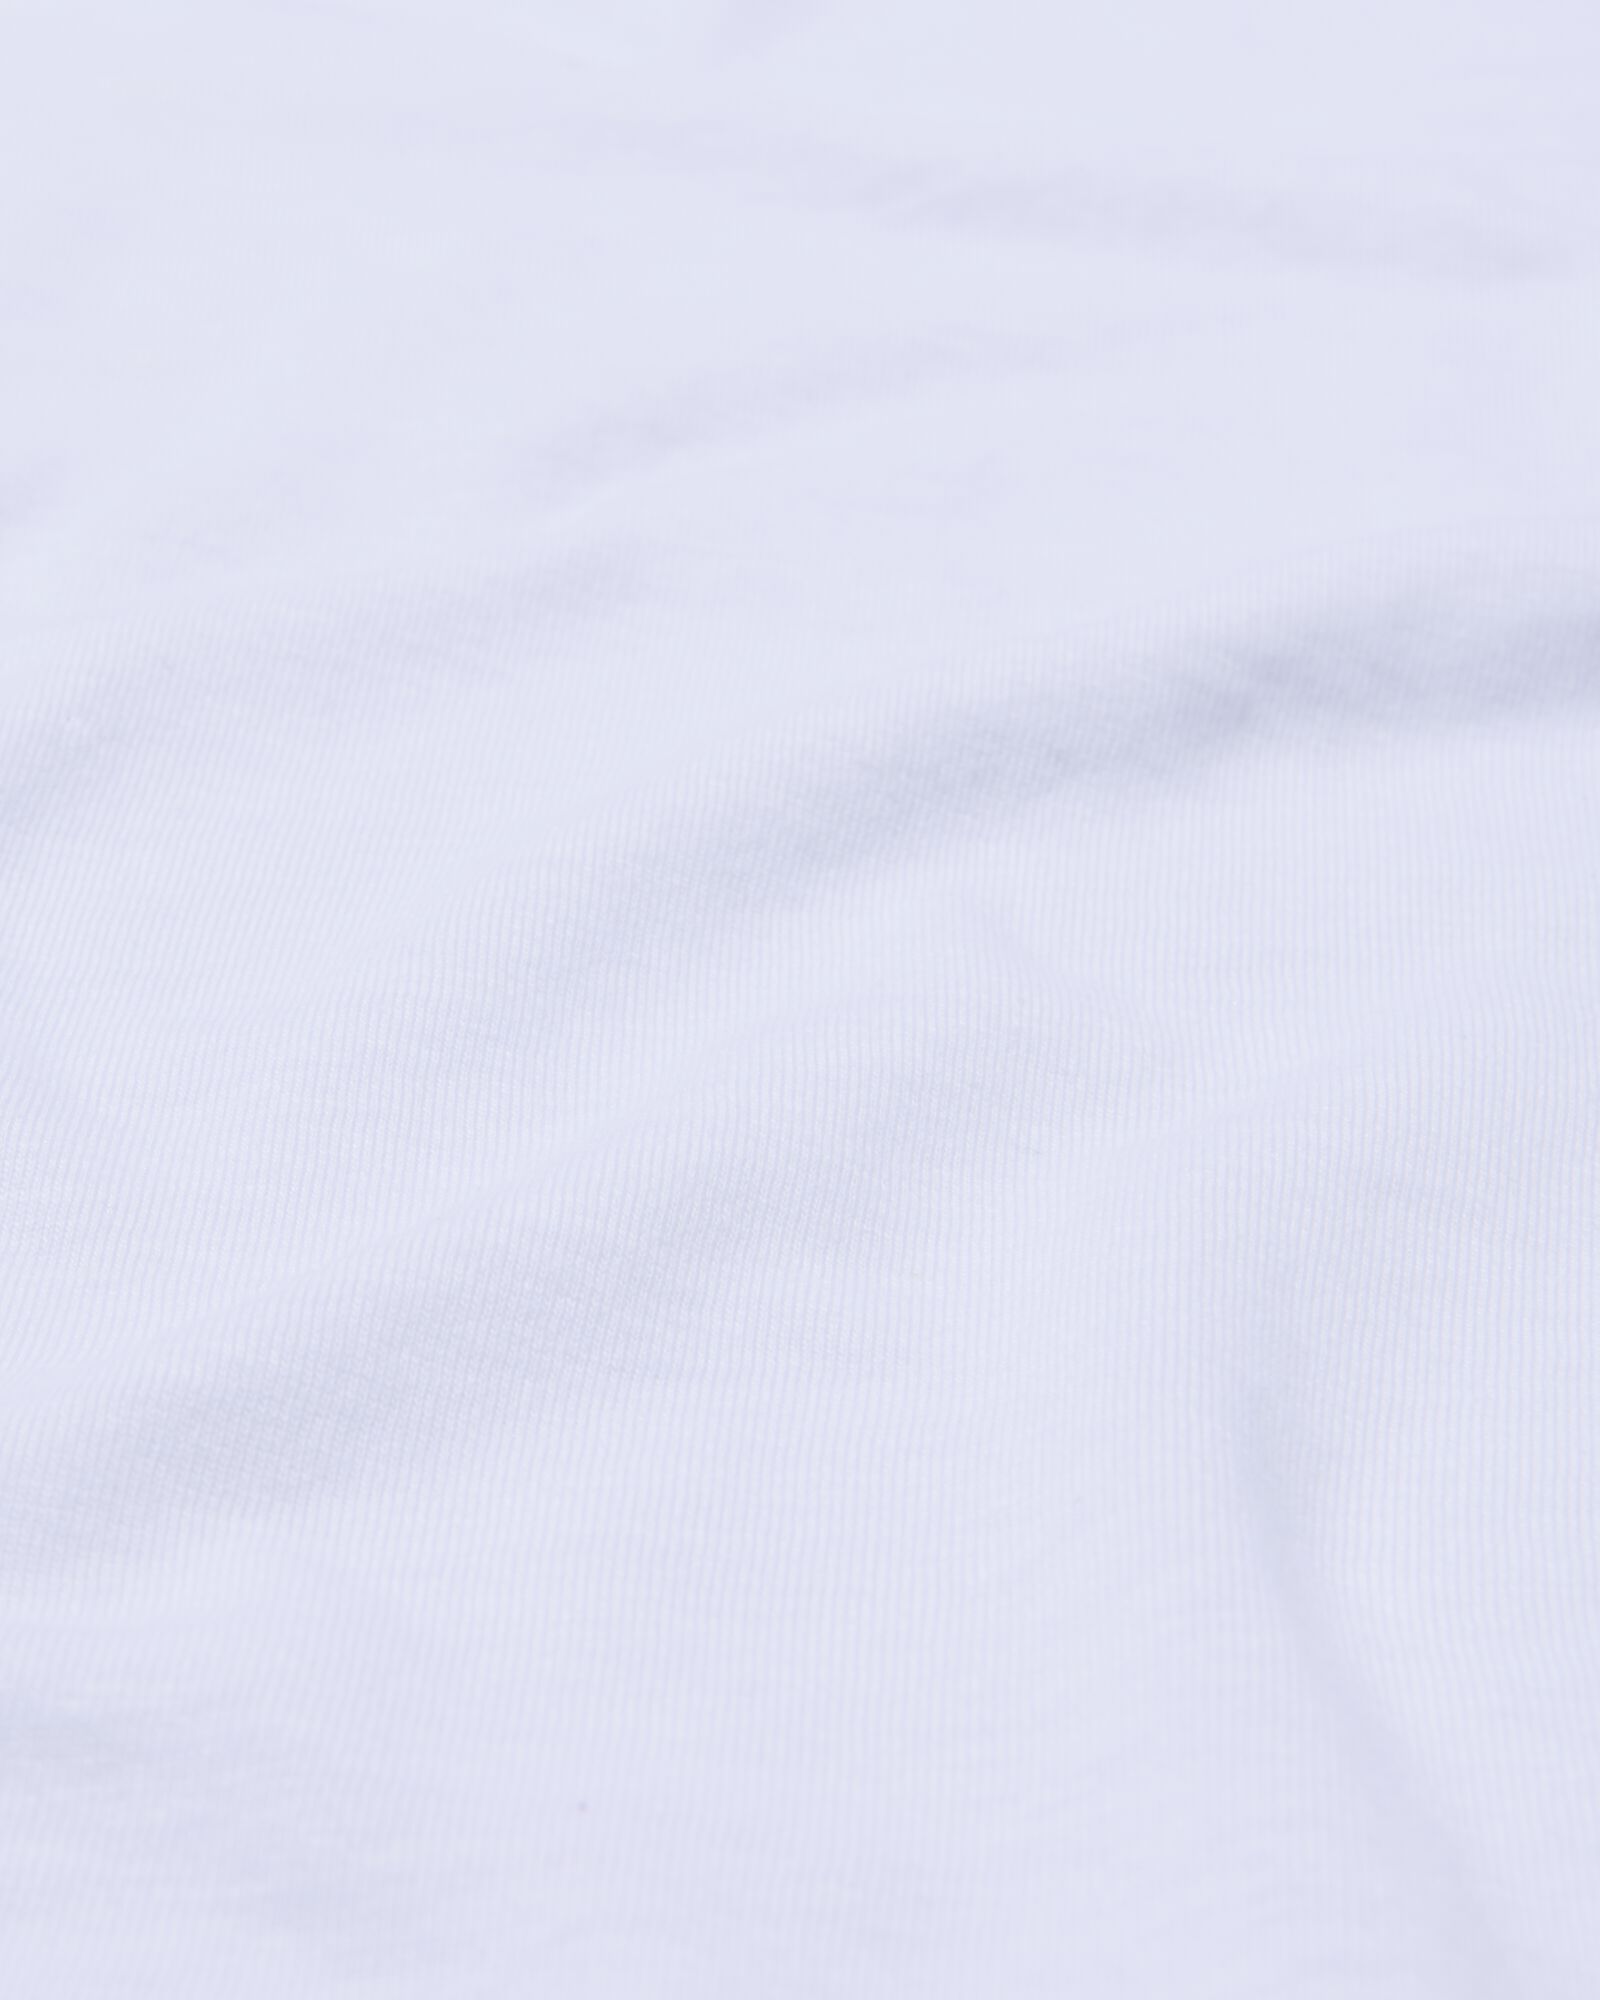 Spannbettlaken, Baumwollperkal, 200 x 200 cm, weiß - 5180108 - HEMA